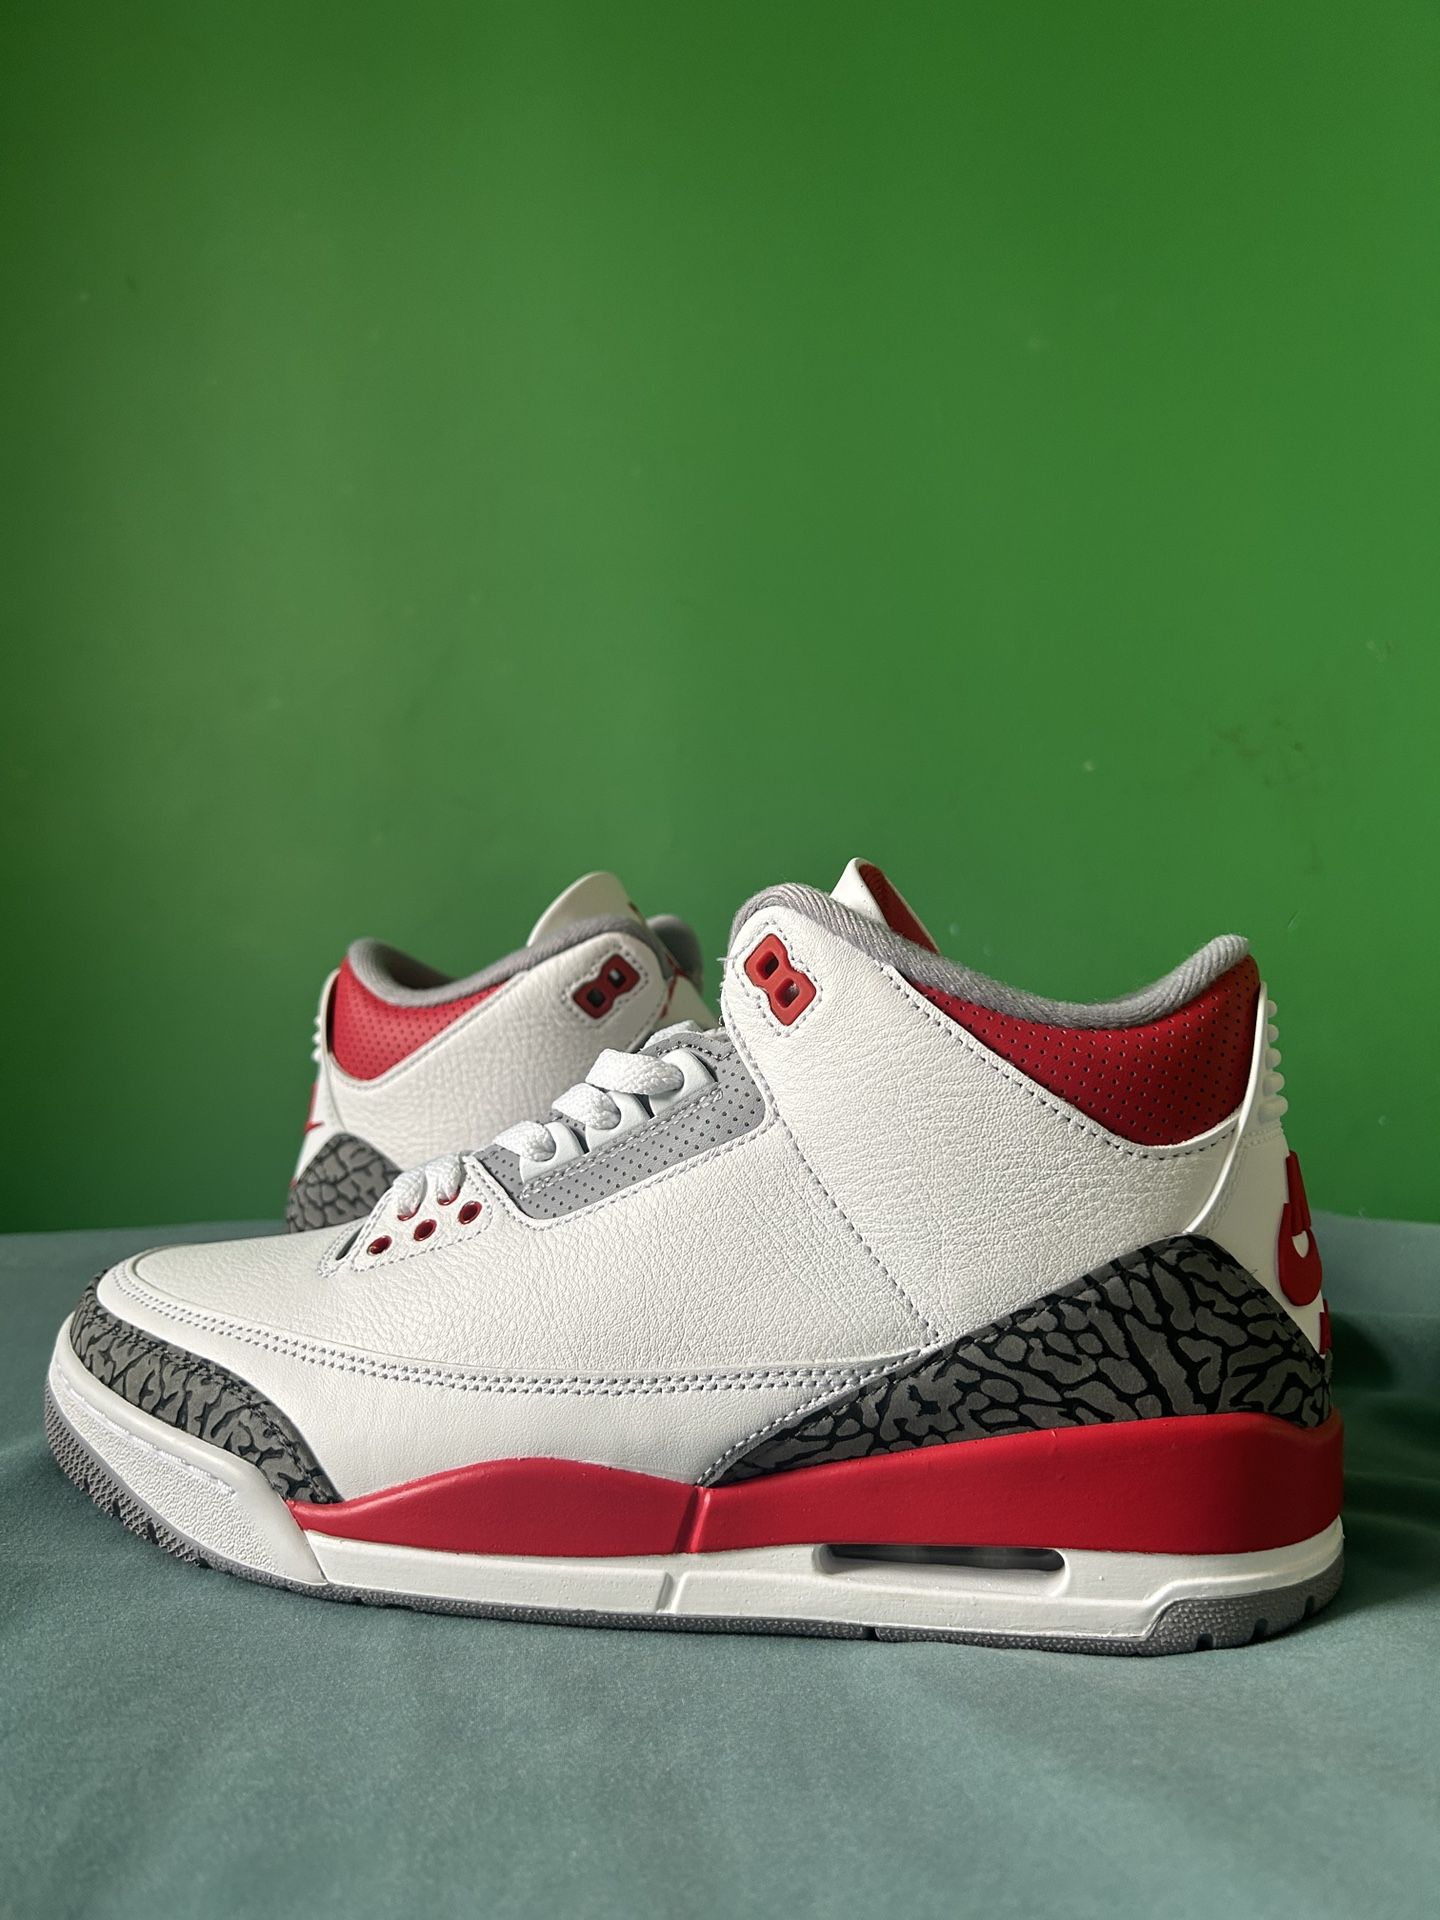 Nike Air Jordan 3 Fire Red Size 10.5